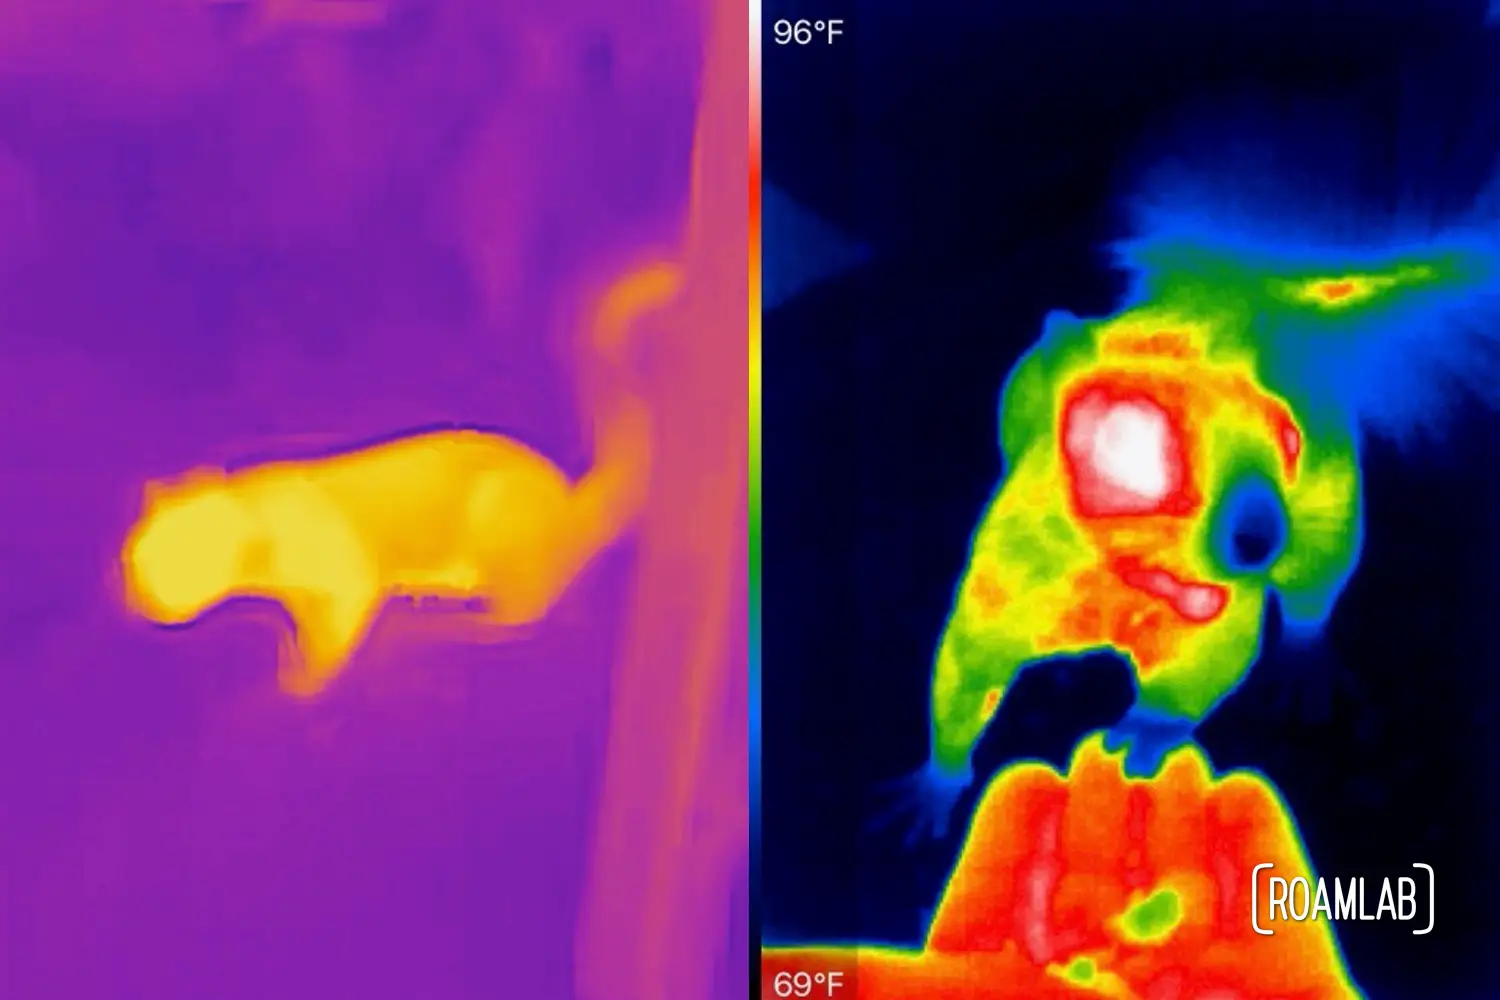 Comparing FLIR and Seek thermal images of squirrels